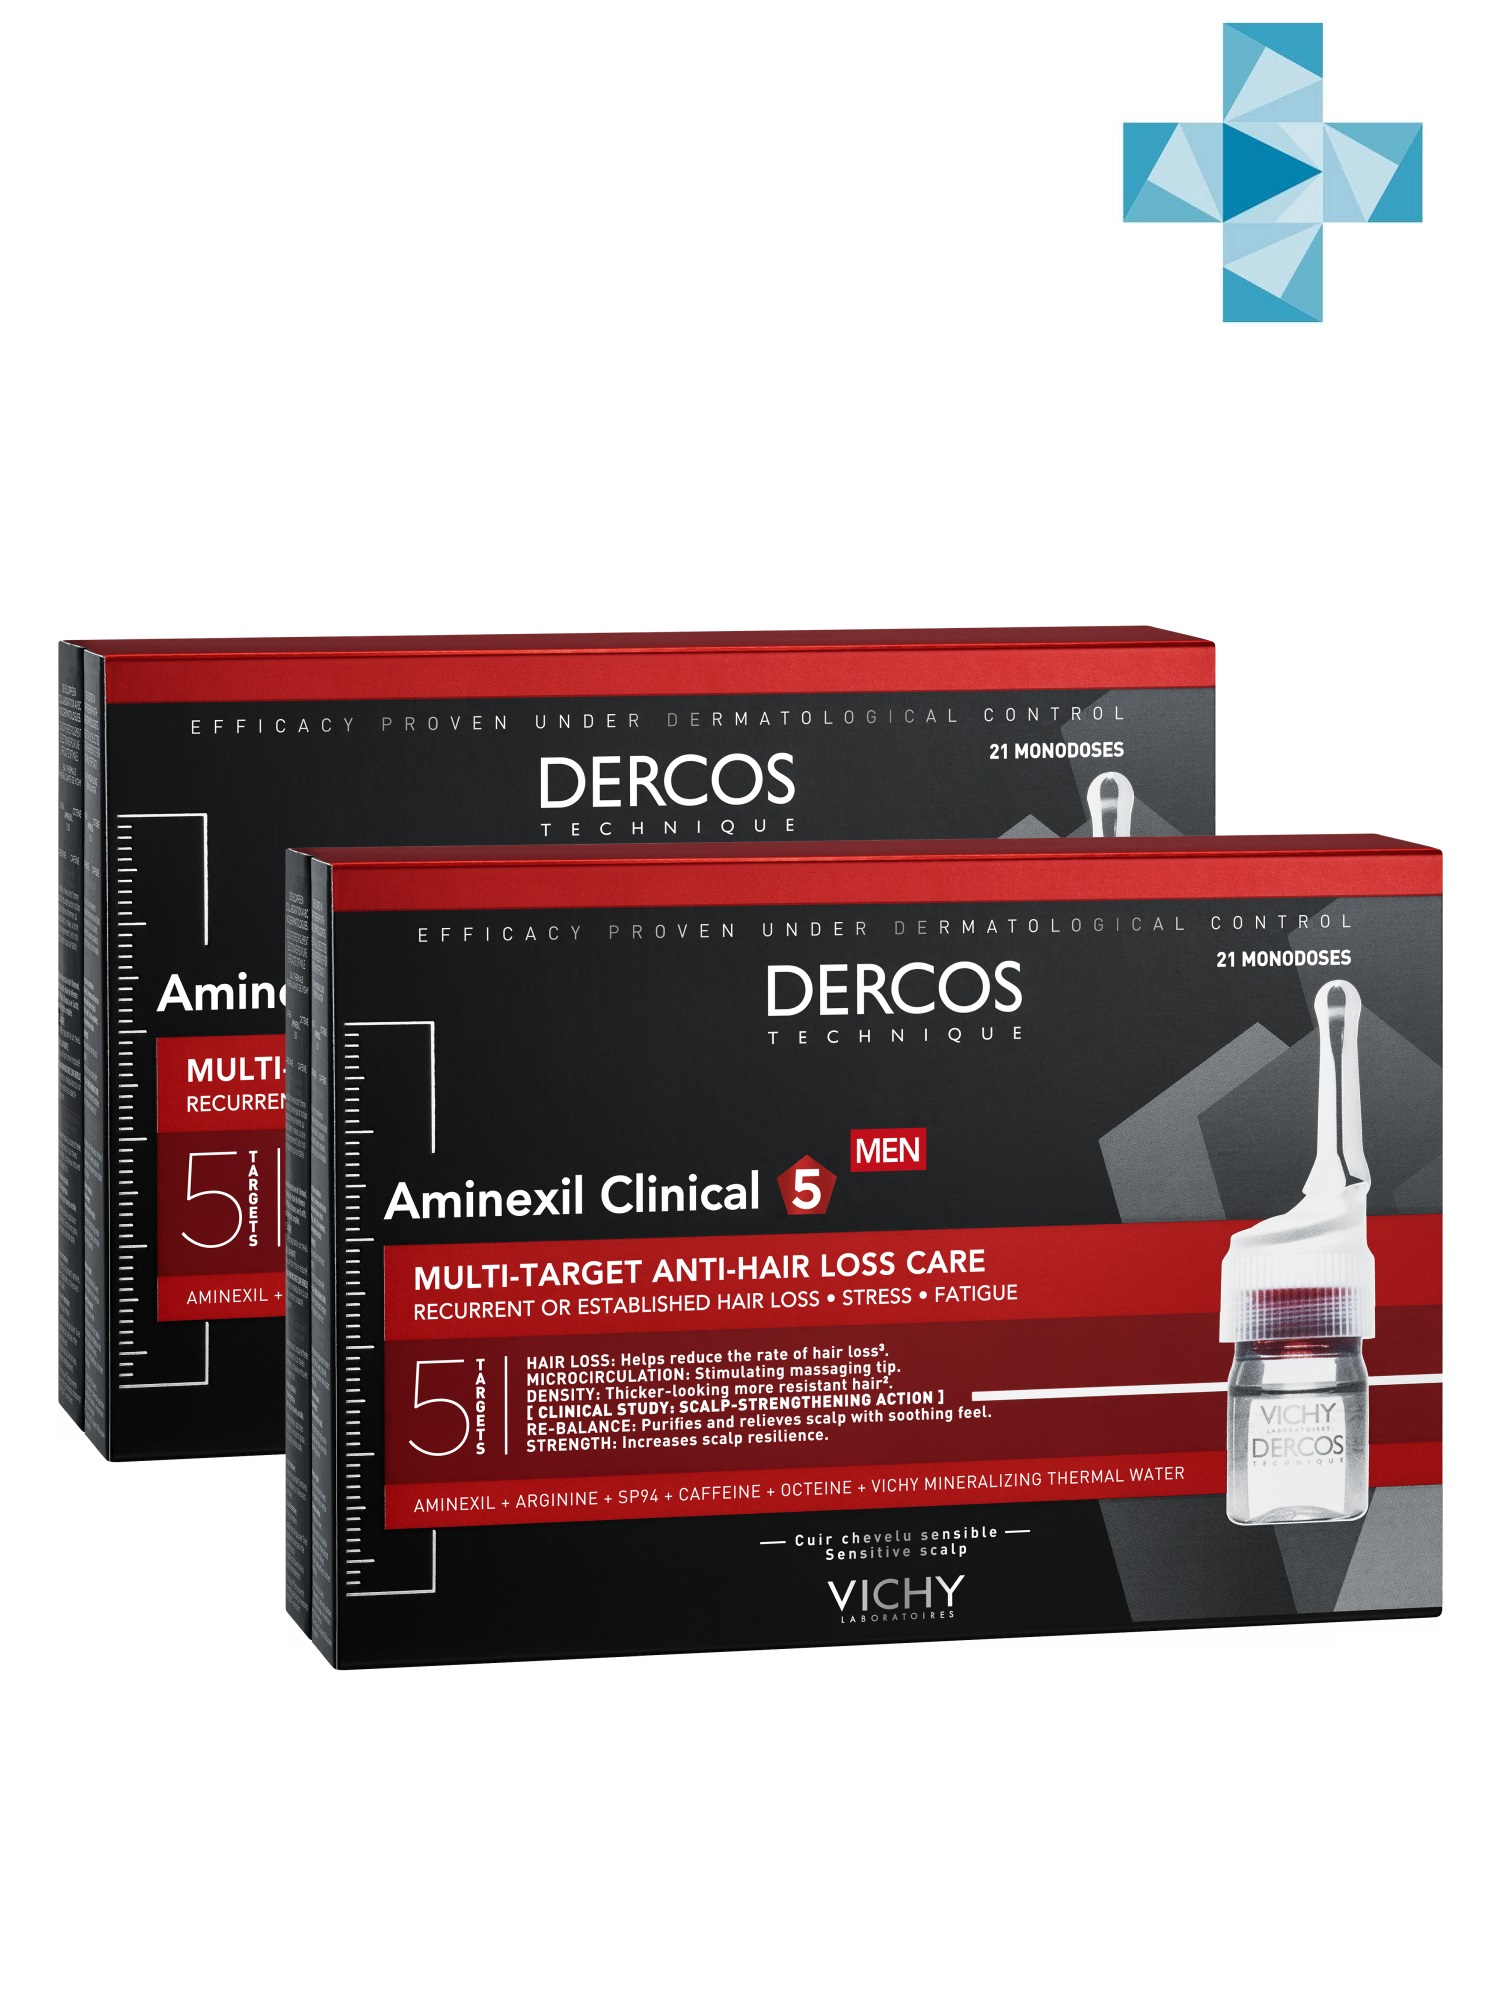 Vichy Комплект Средство против выпадения волос для мужчин Аминексил Intensive 5, 2 шт. по 21 монодоза (Vichy, Dercos Aminexil)